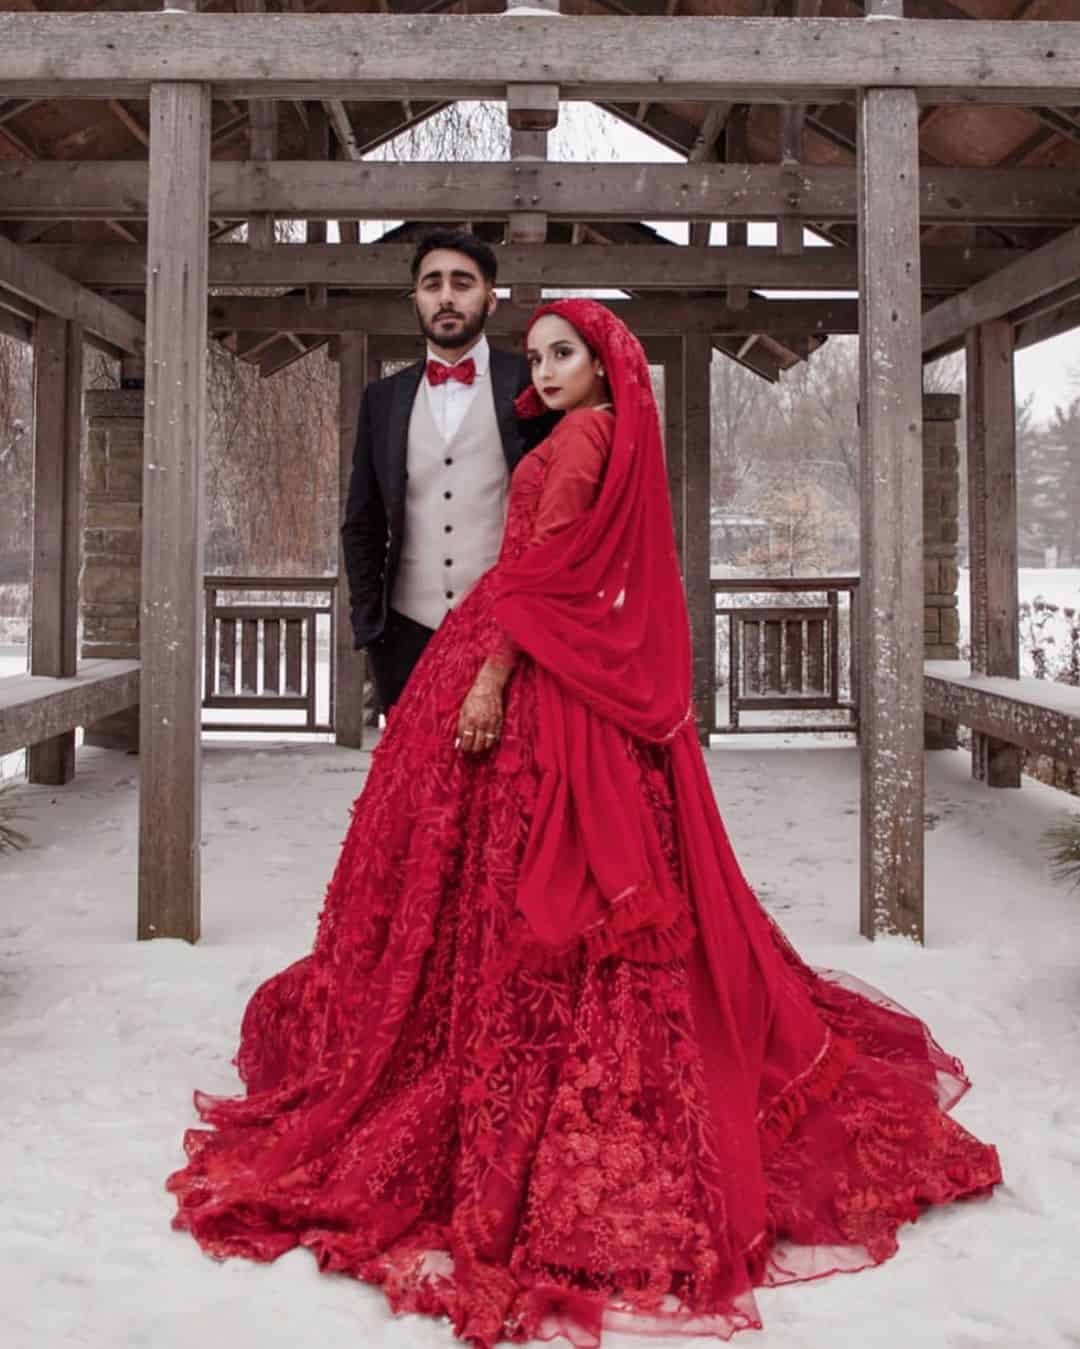 February - Winter wedding dress